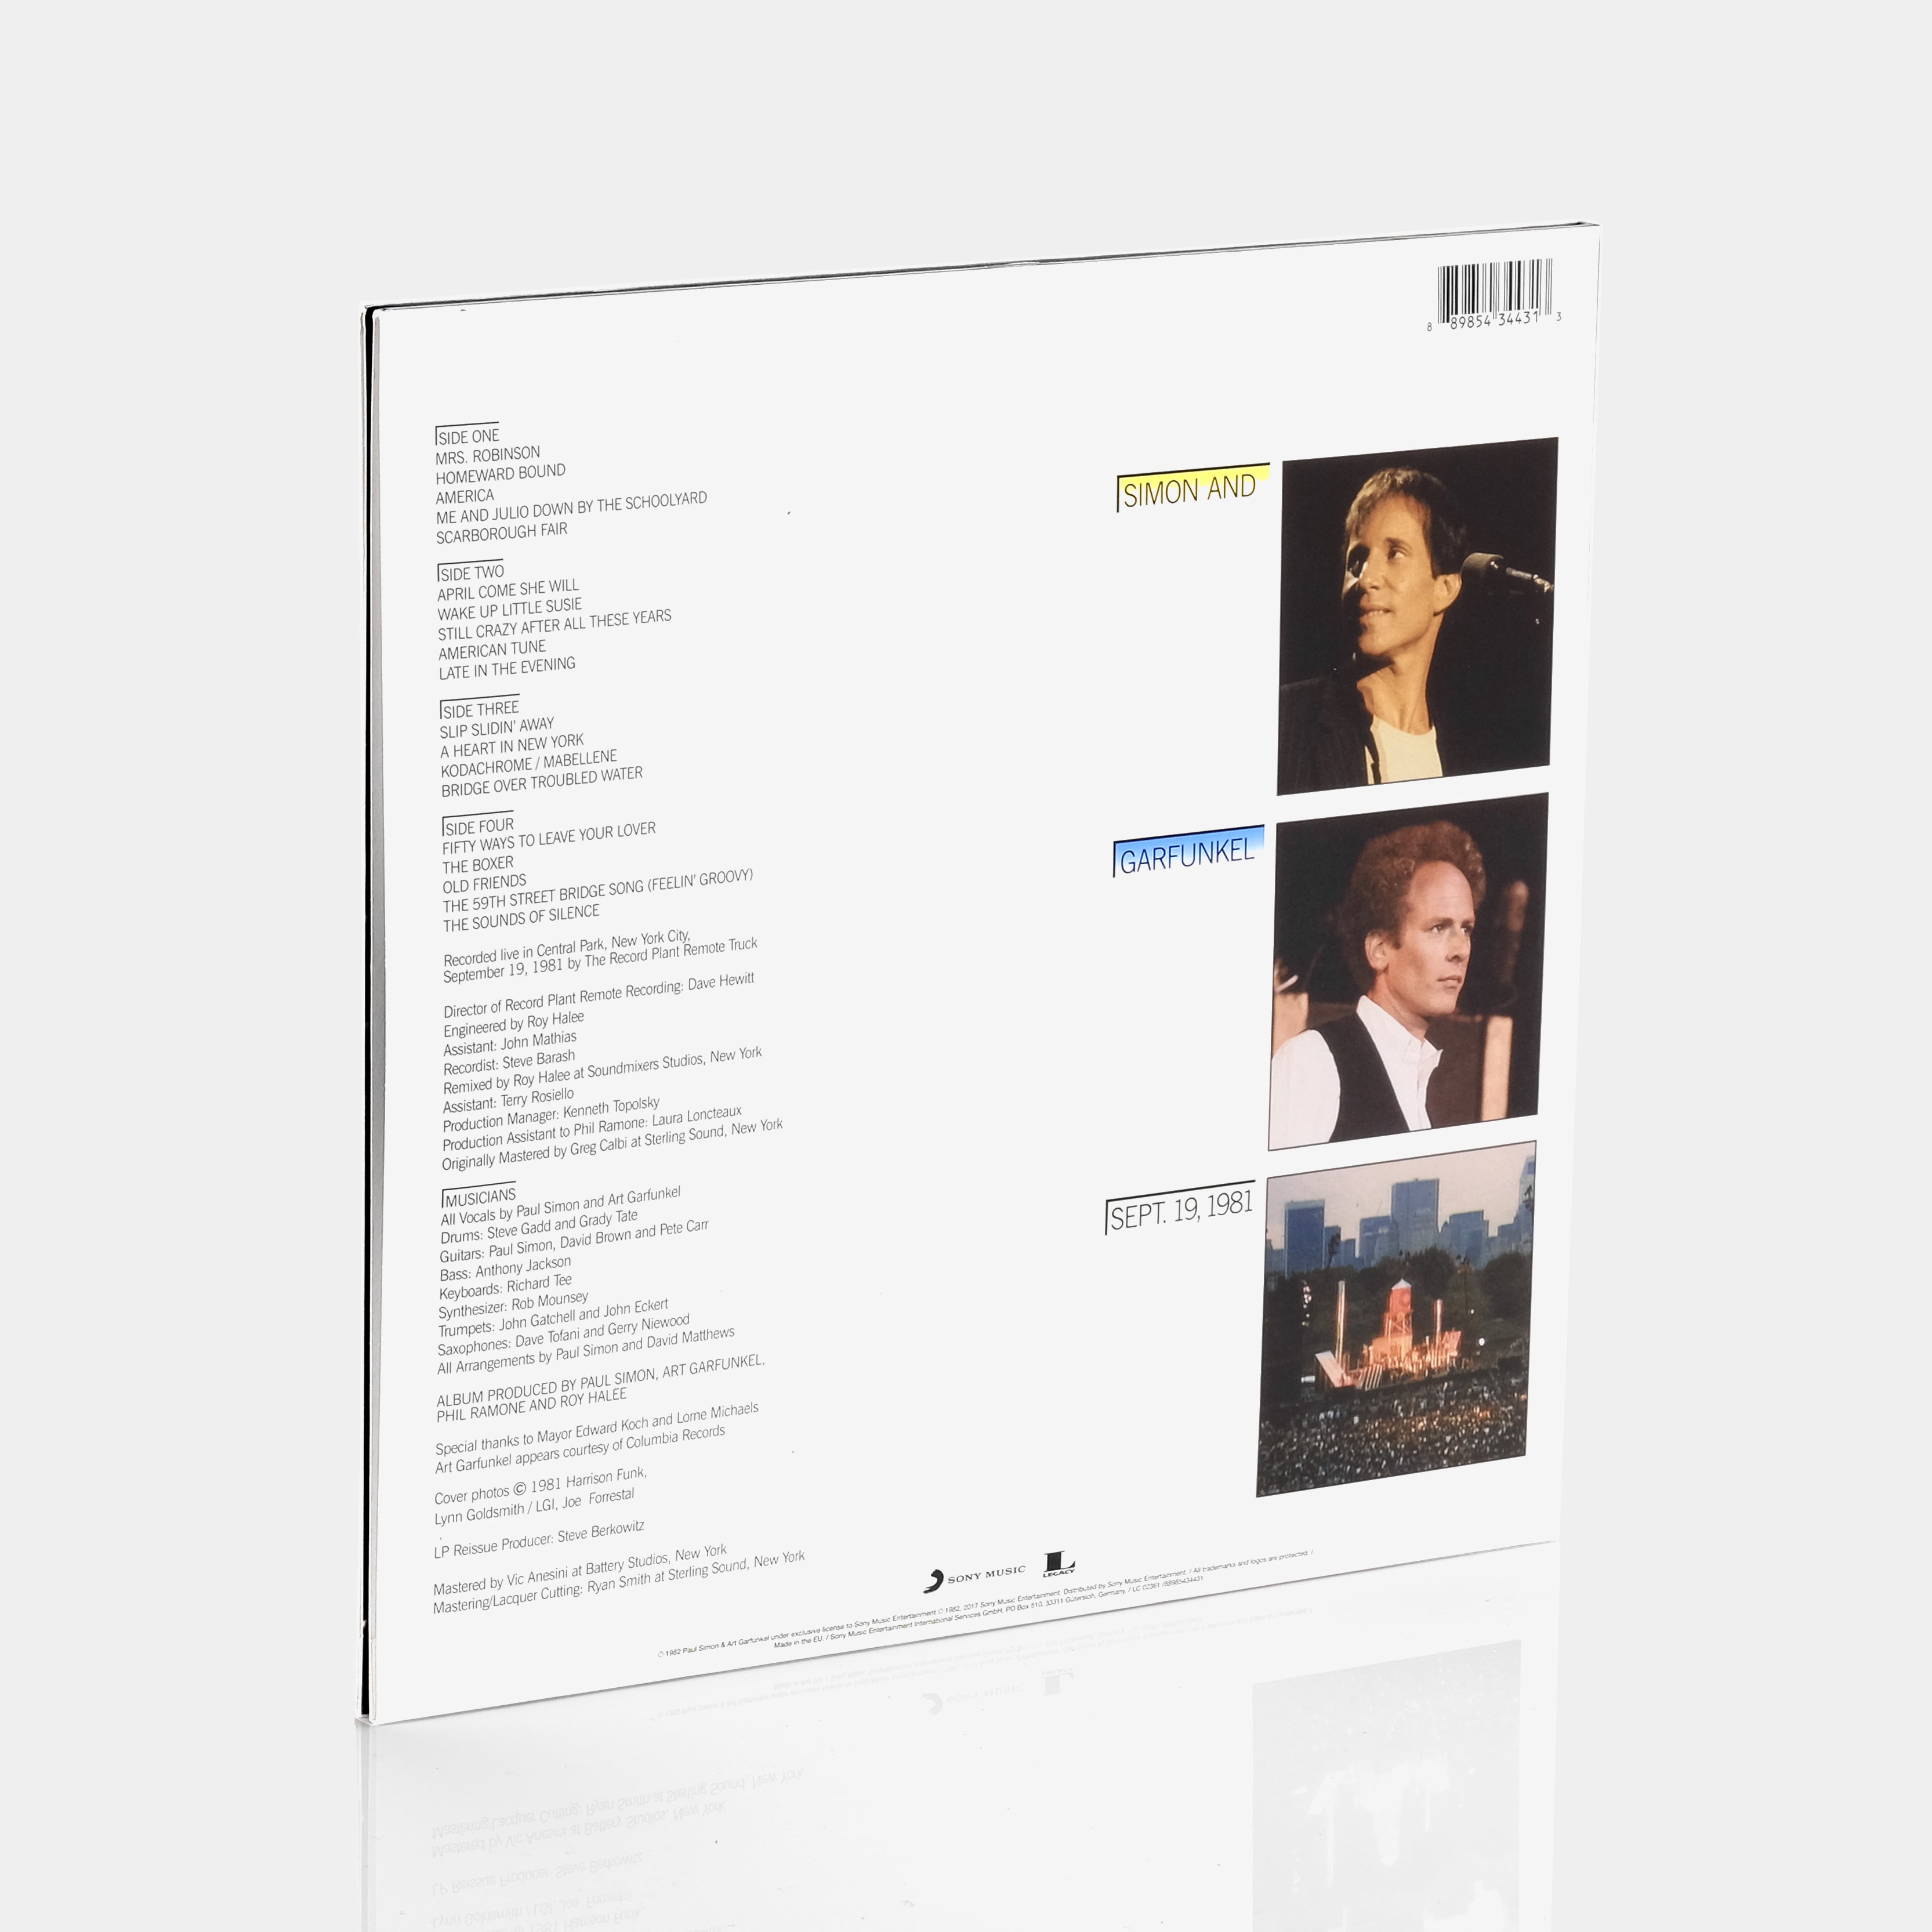 Simon & Garfunkel - The Concert In Central Park 2xLP Vinyl Record